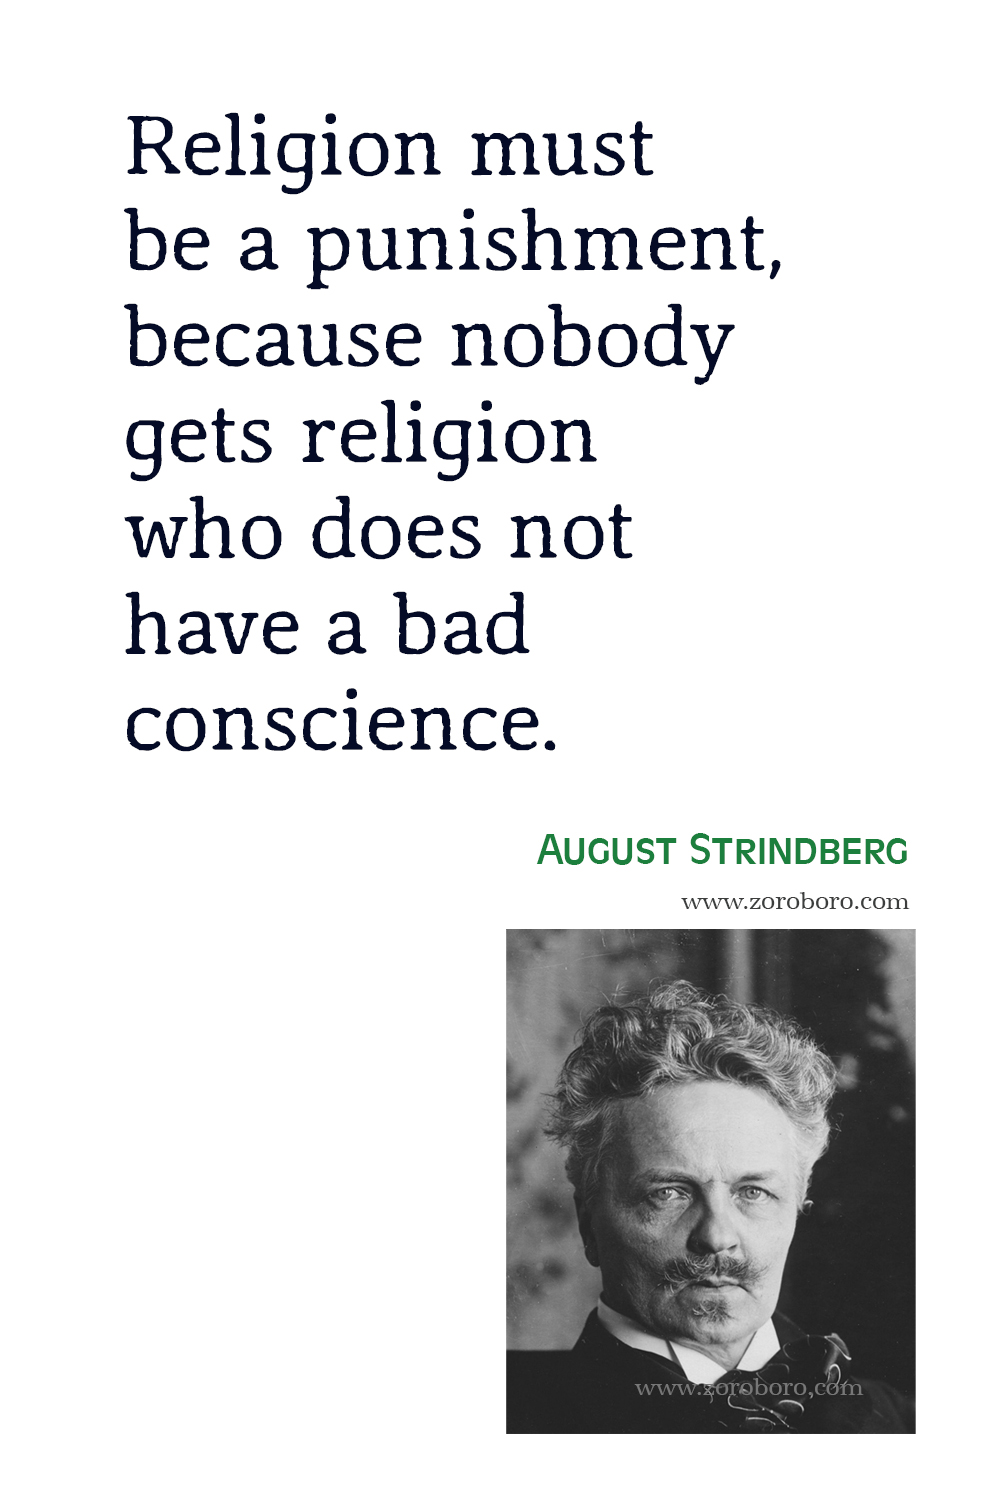 August Strindberg Quotes, August Strindberg, Married, The Cloister, Plays, August Strindberg The Father Quotes, August Strindberg Books Quotes